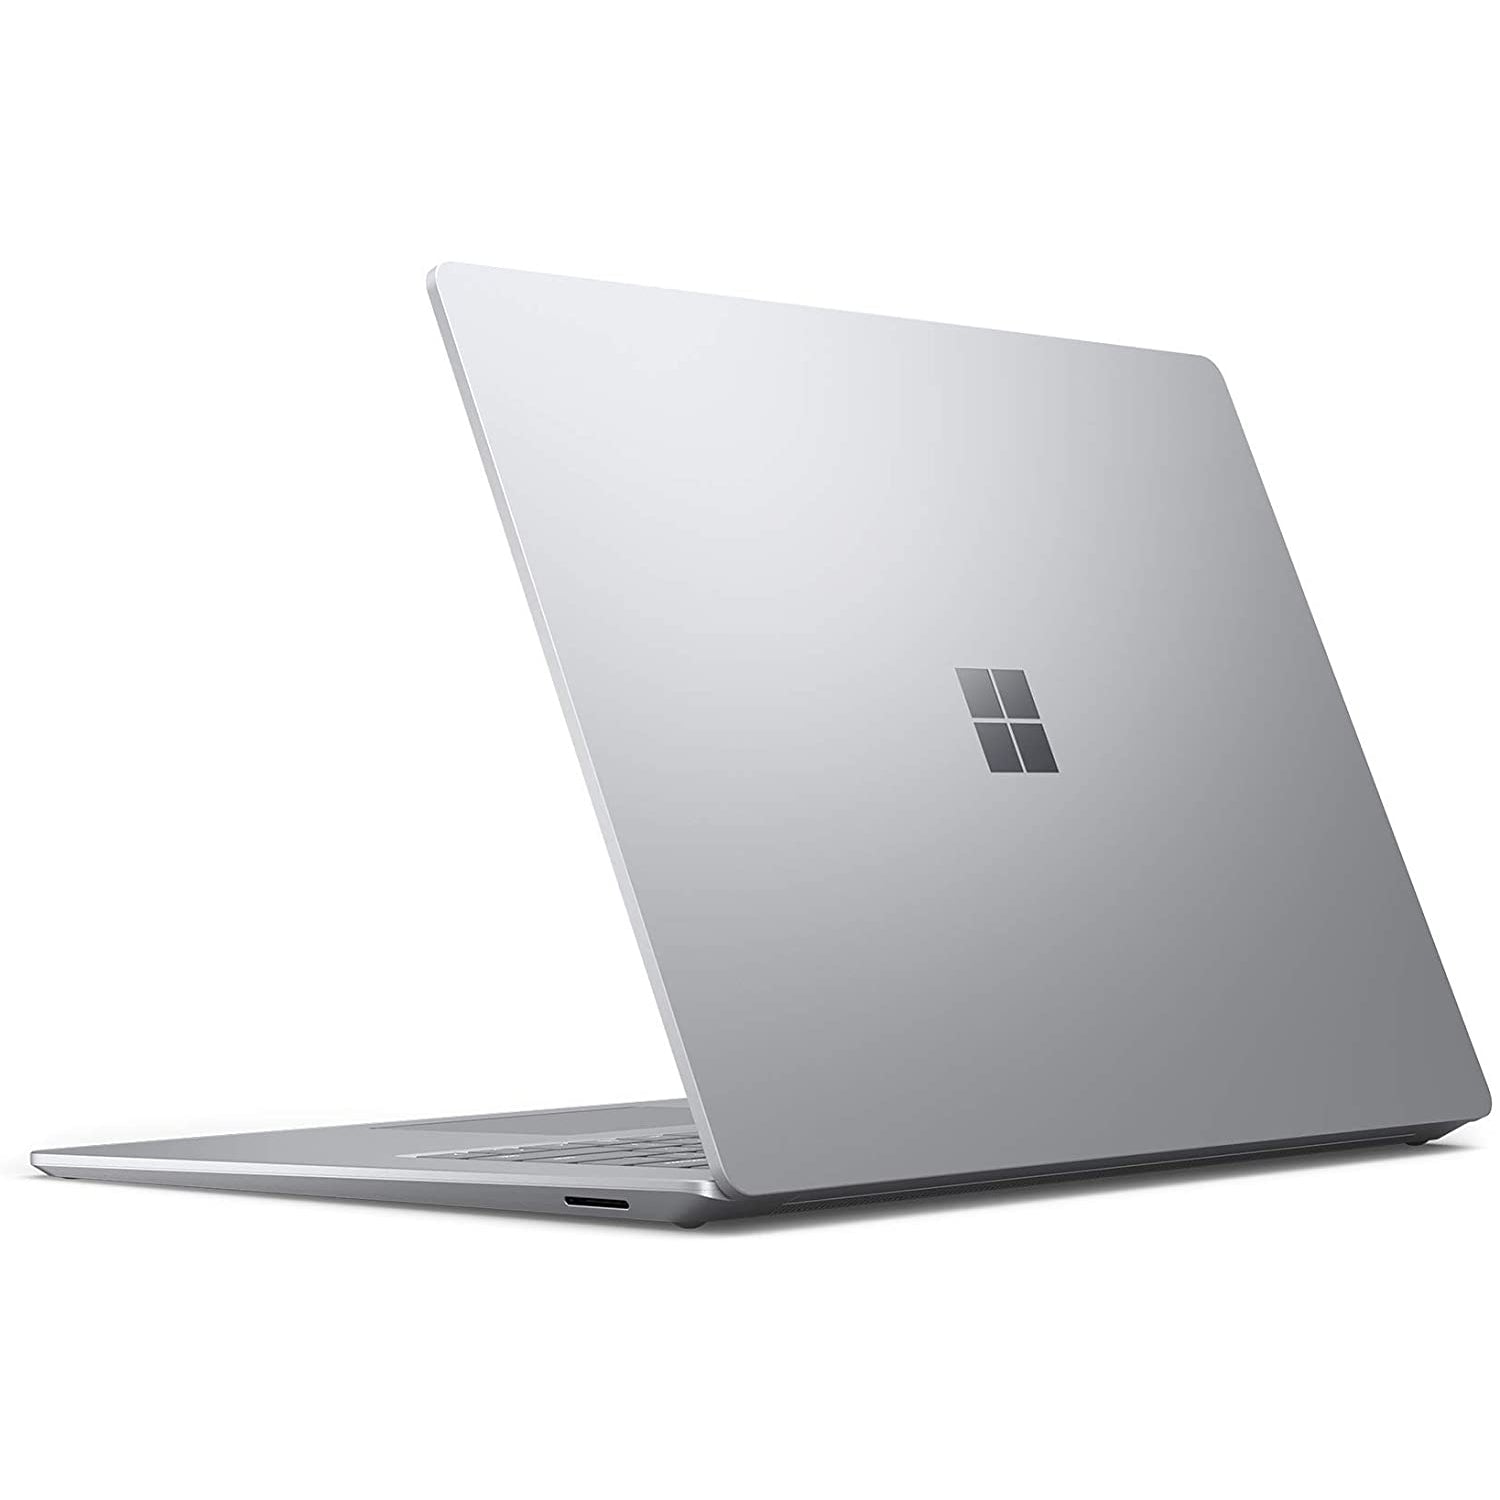 Microsoft Surface Laptop 3 1873 AMD Ryzen 5 16GB RAM 256GB SSD 13.5" - Silver